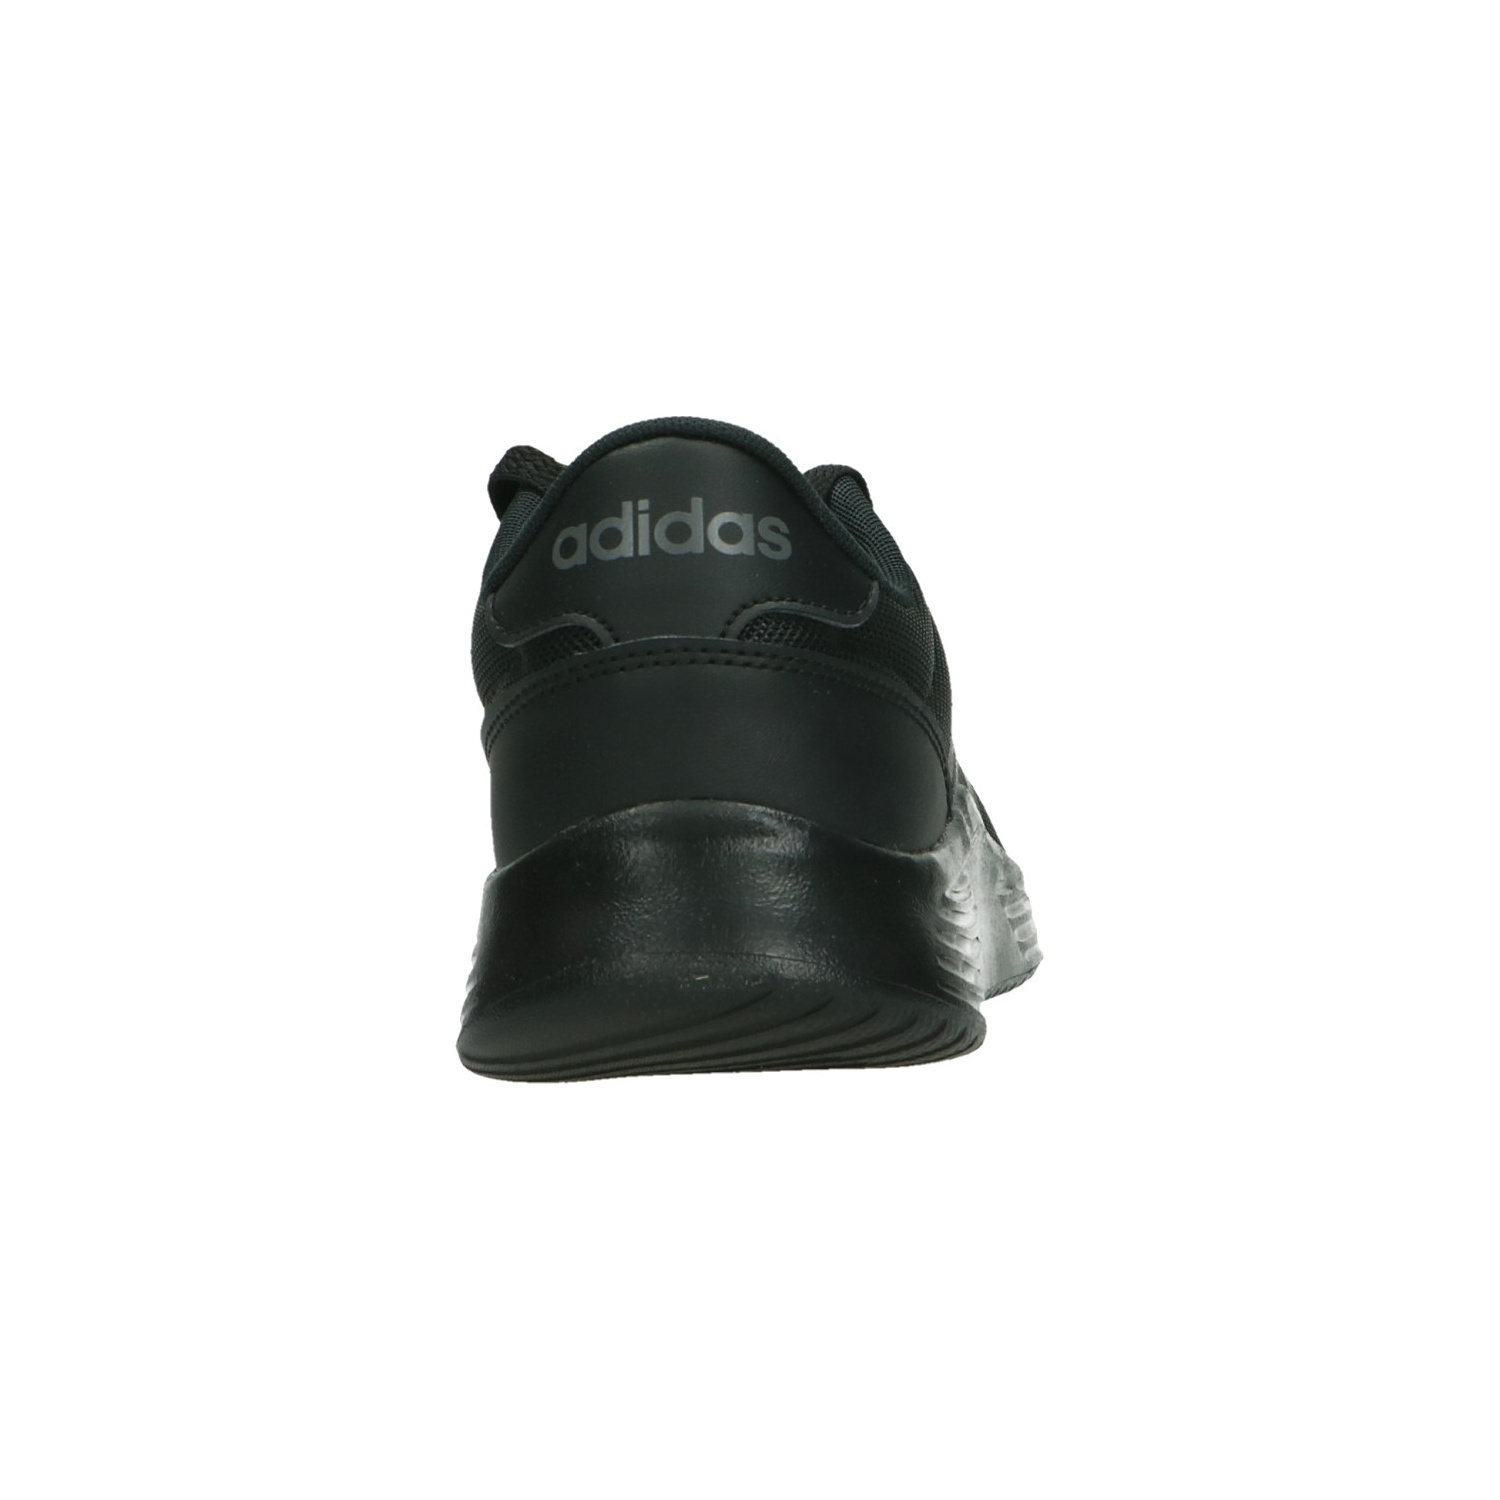 Adidas Low sneaker black - Sportshoes Shoes - Men -